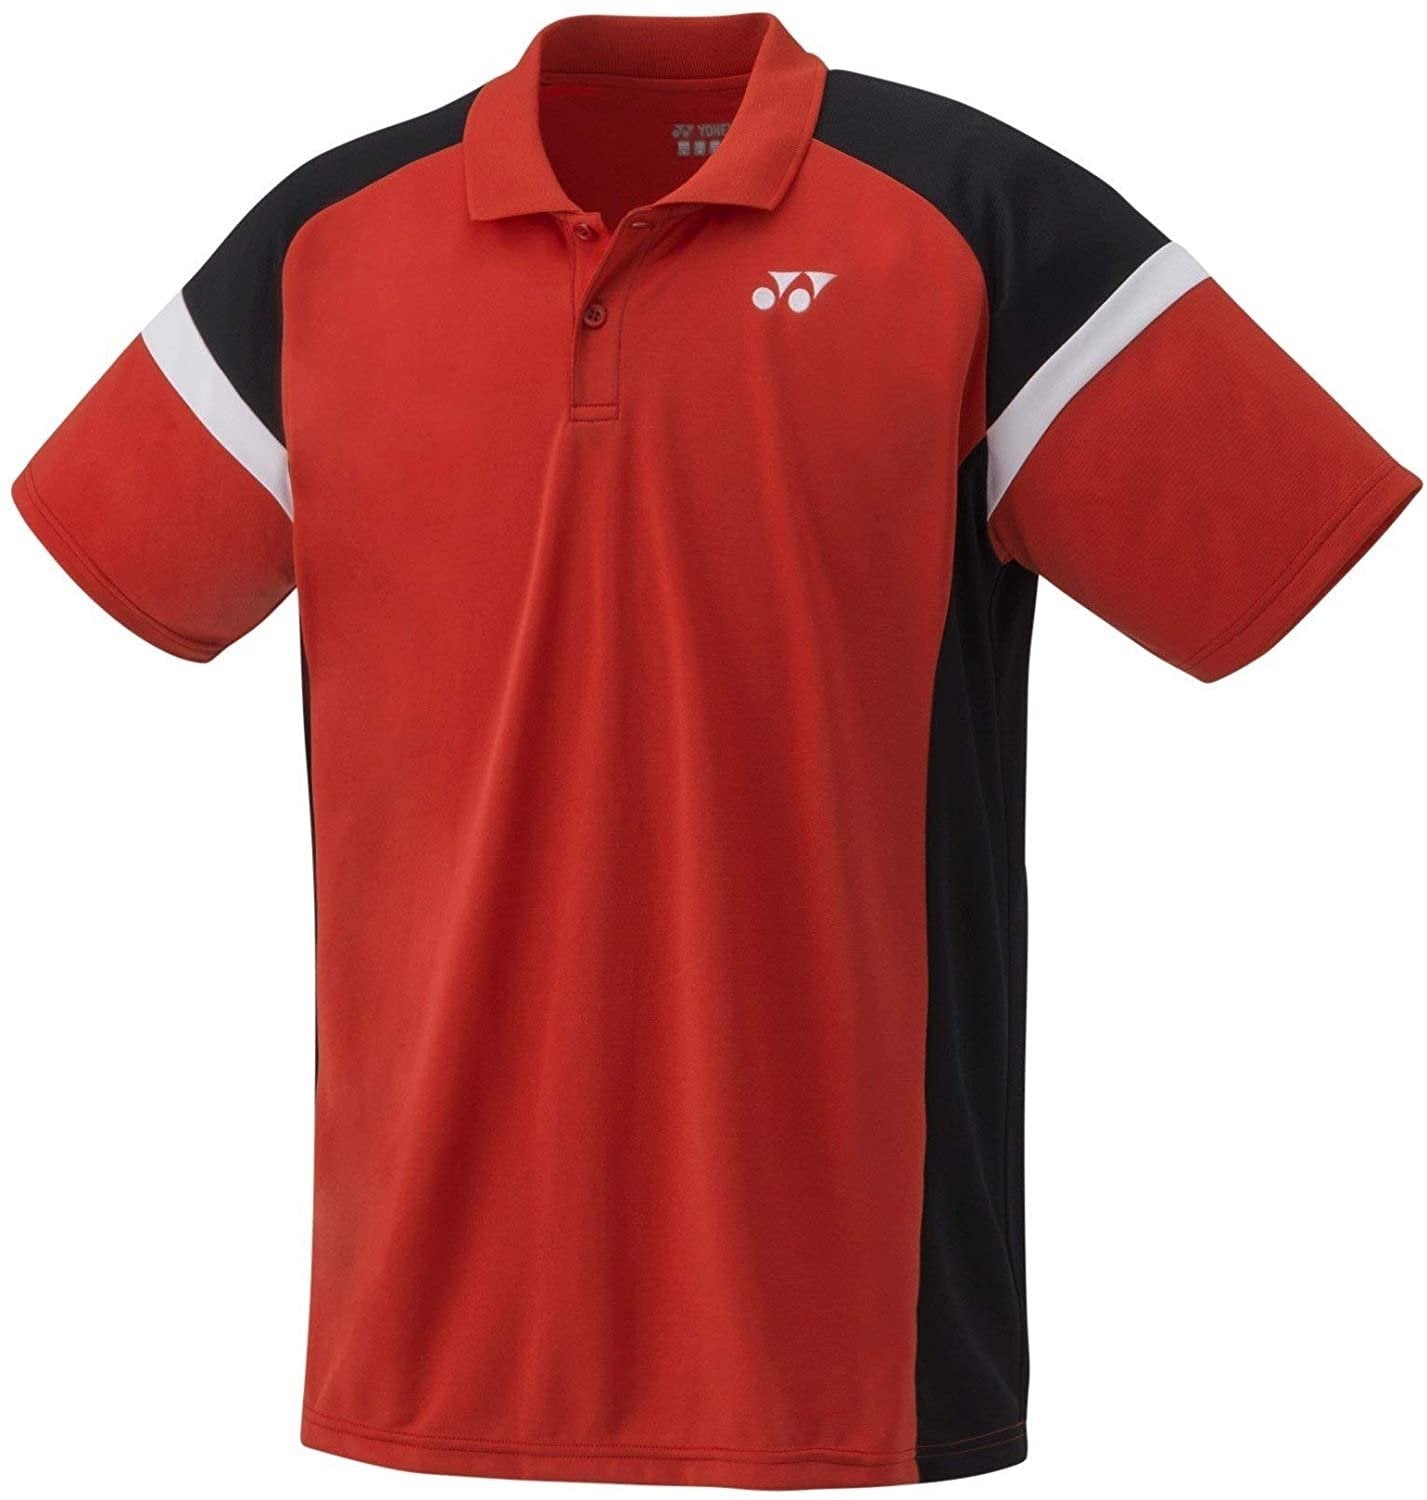 Yonex YM0002 Badminton Shirt, Sunset -  Red